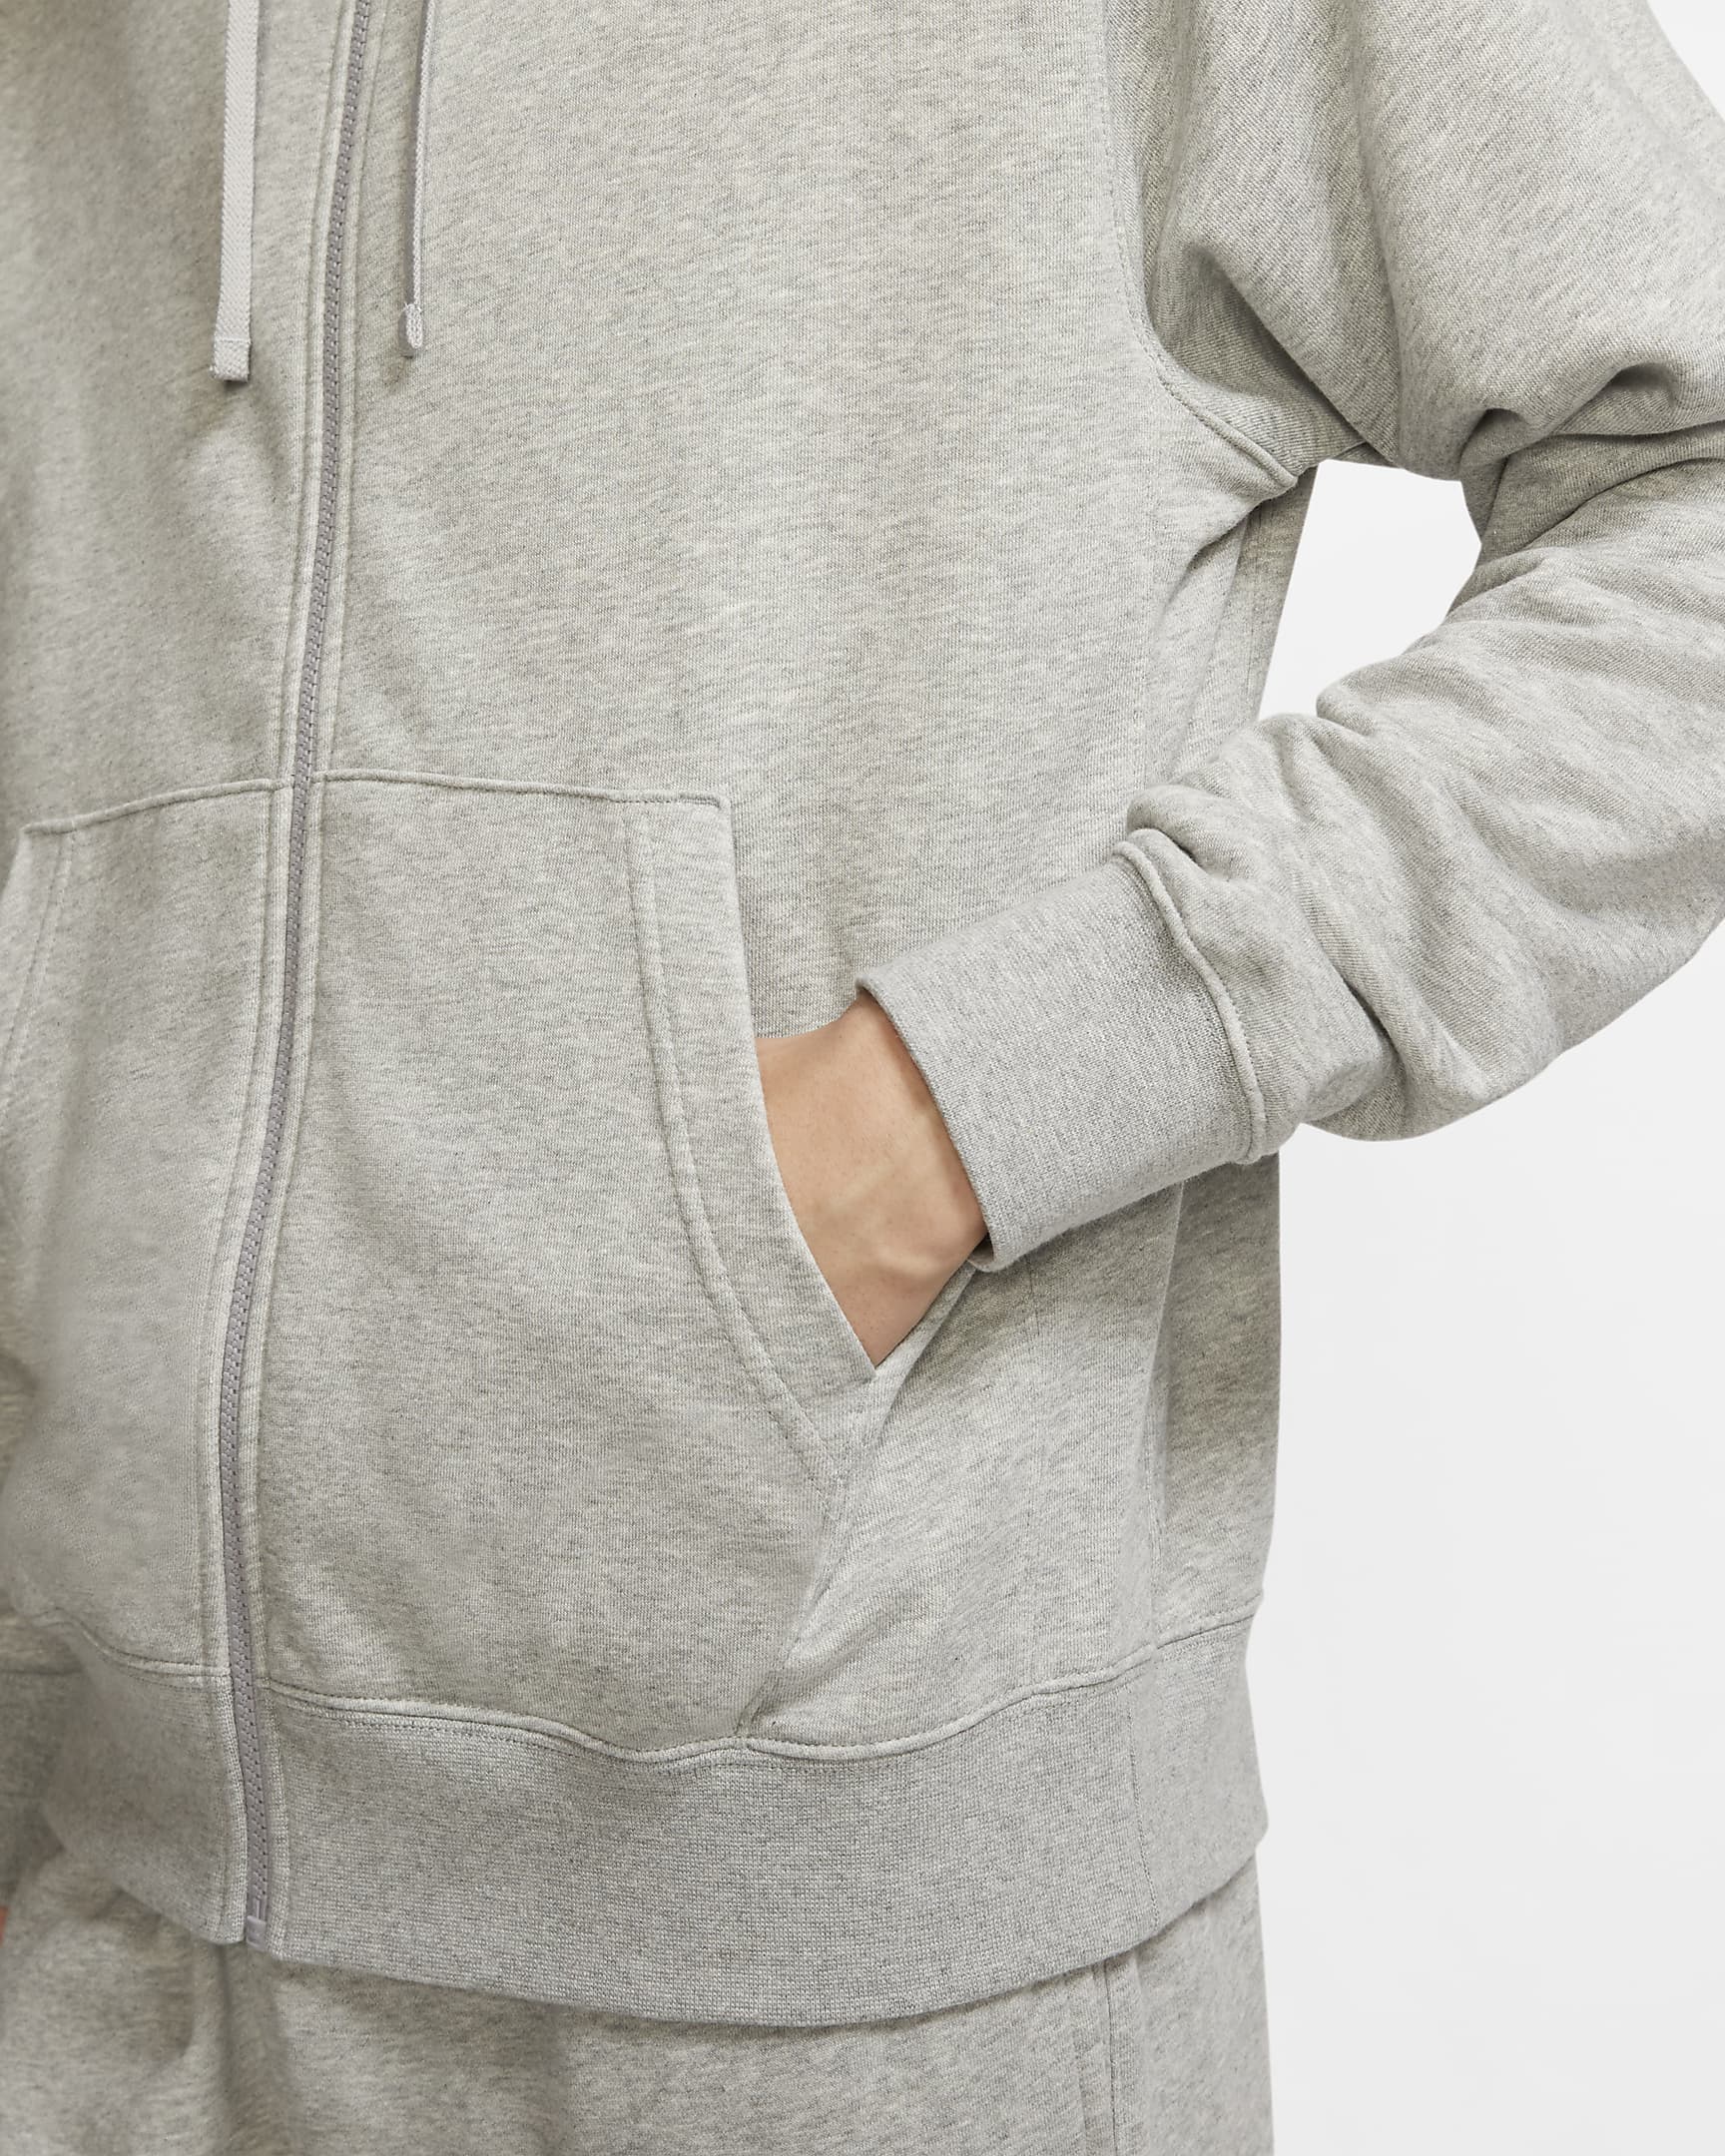 Hoodie com fecho completo Nike Sportswear Club para homem - Cinzento Heather escuro/Prateado Matte/Branco